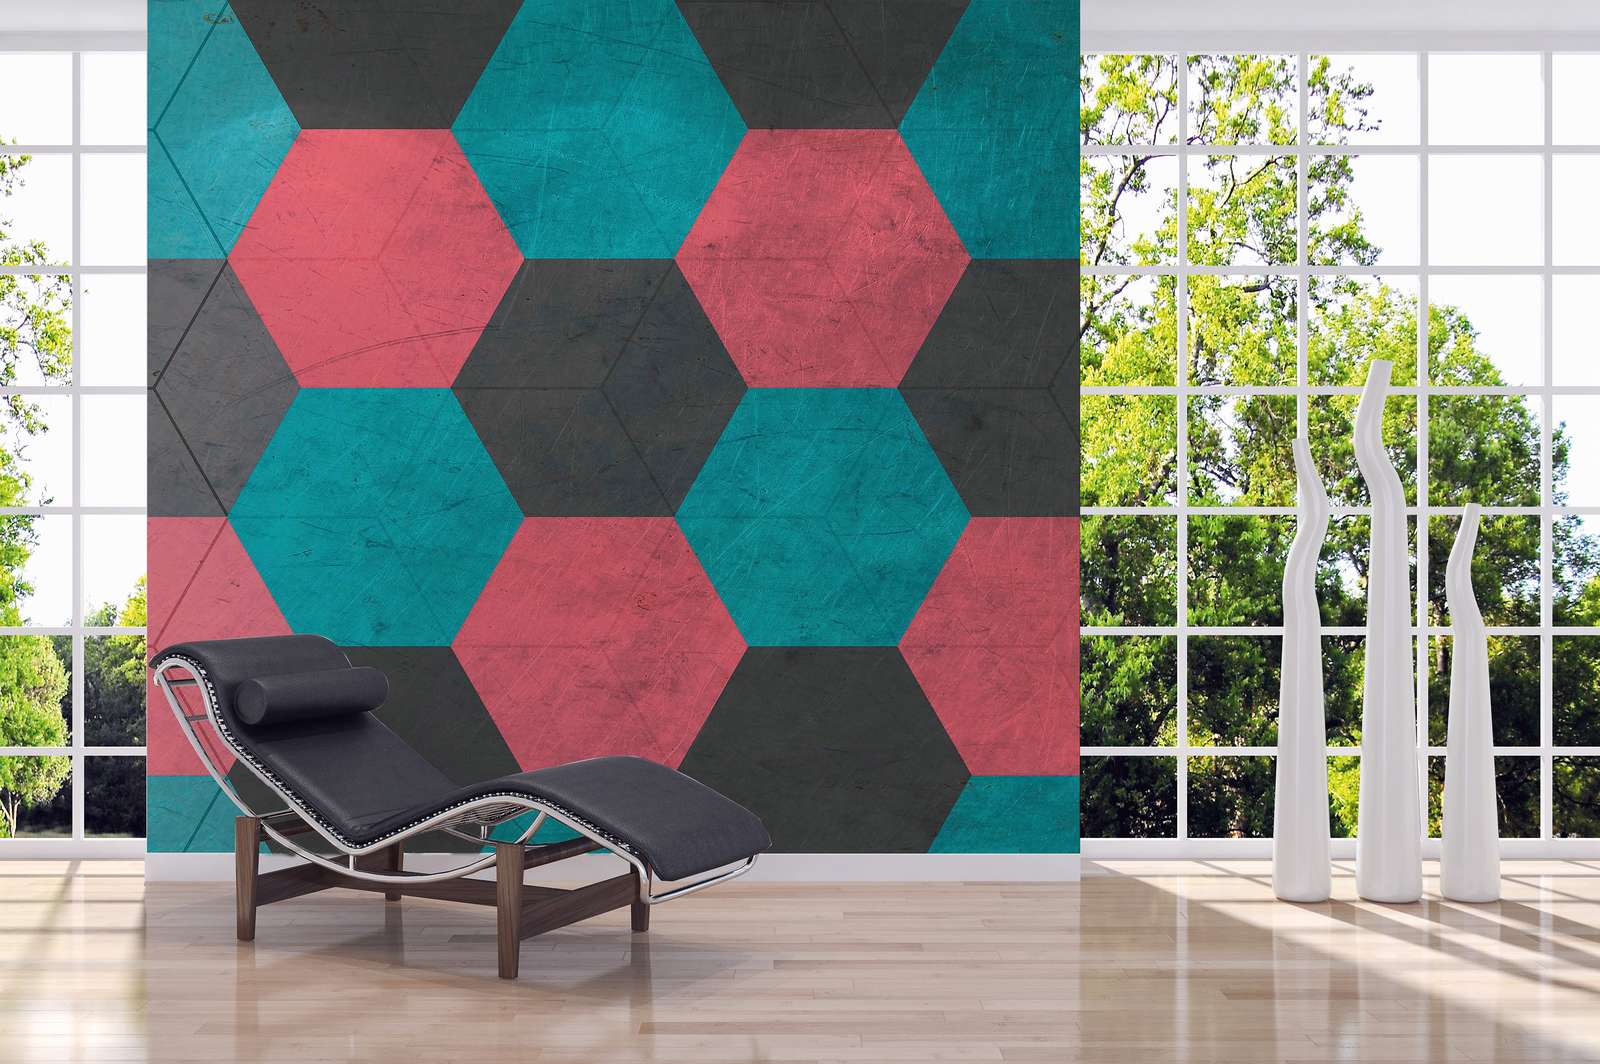             Vintage Look Hexagon Tiles Wallpaper - Blue, Red, Black
        